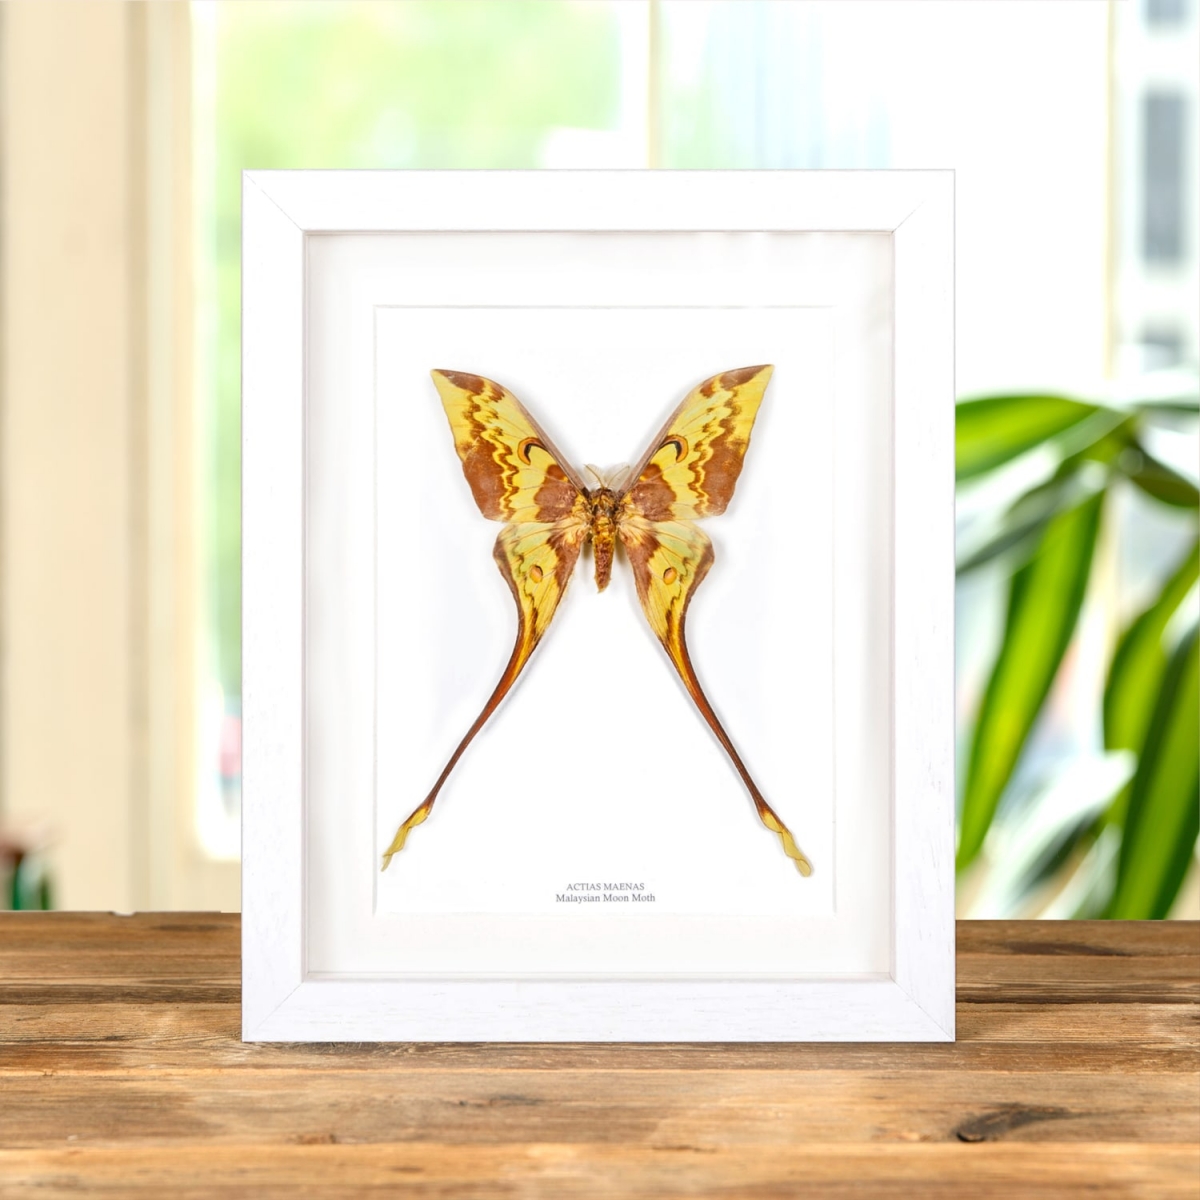 Malaysian Moon Moth in Box Frame (Actias maenas)